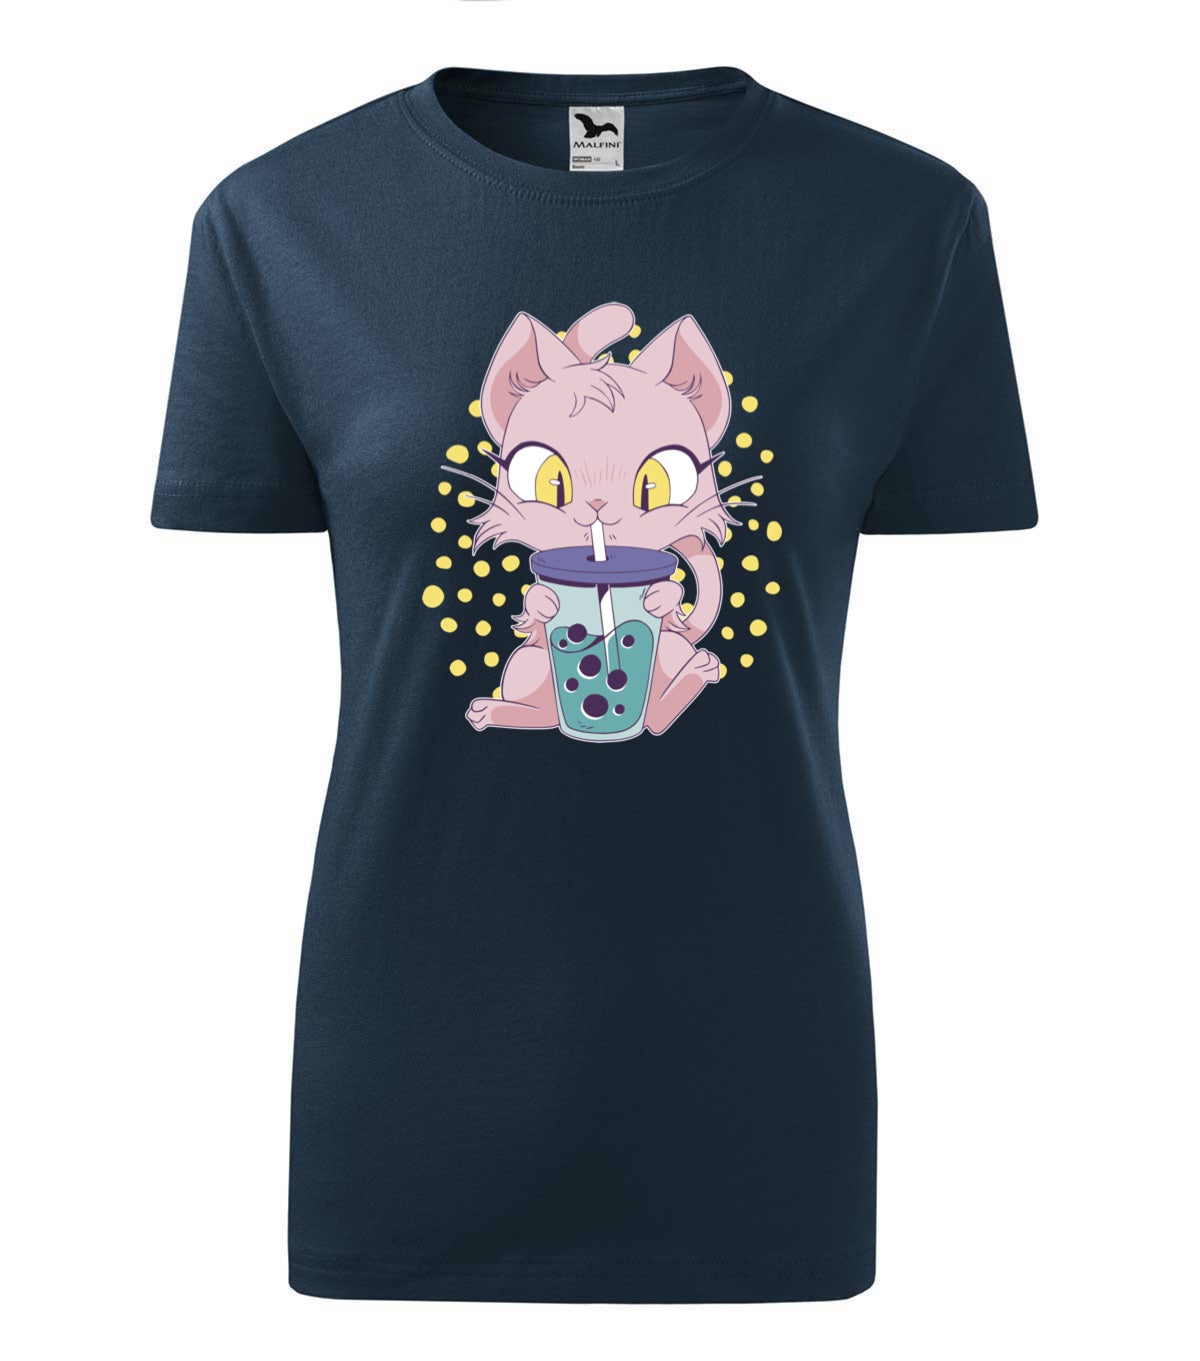 Anime cat női technikai póló